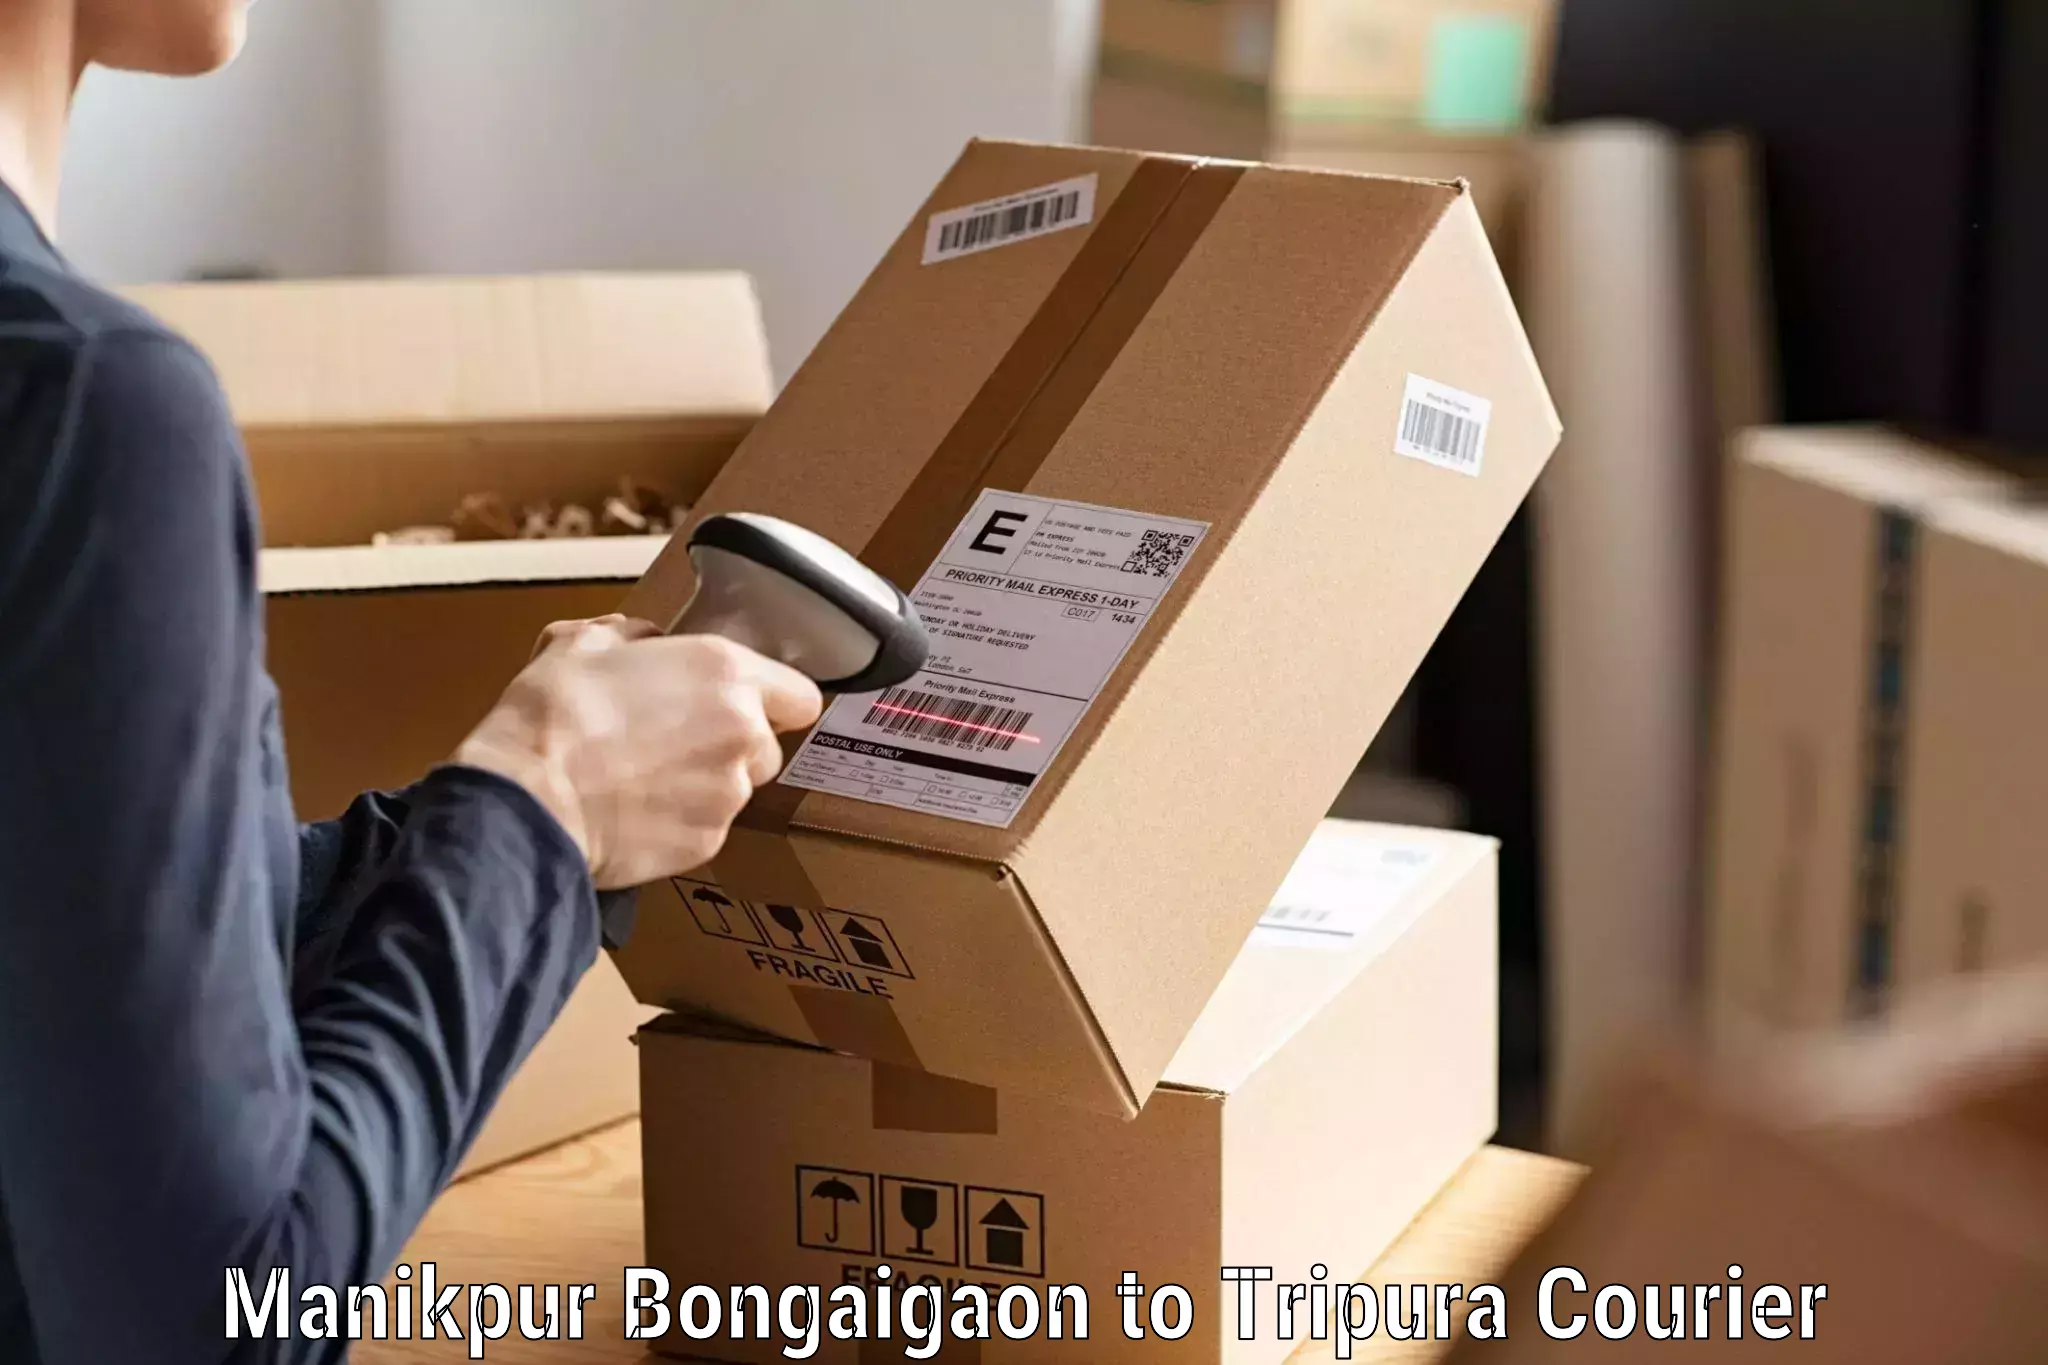 Budget-friendly shipping Manikpur Bongaigaon to Khowai